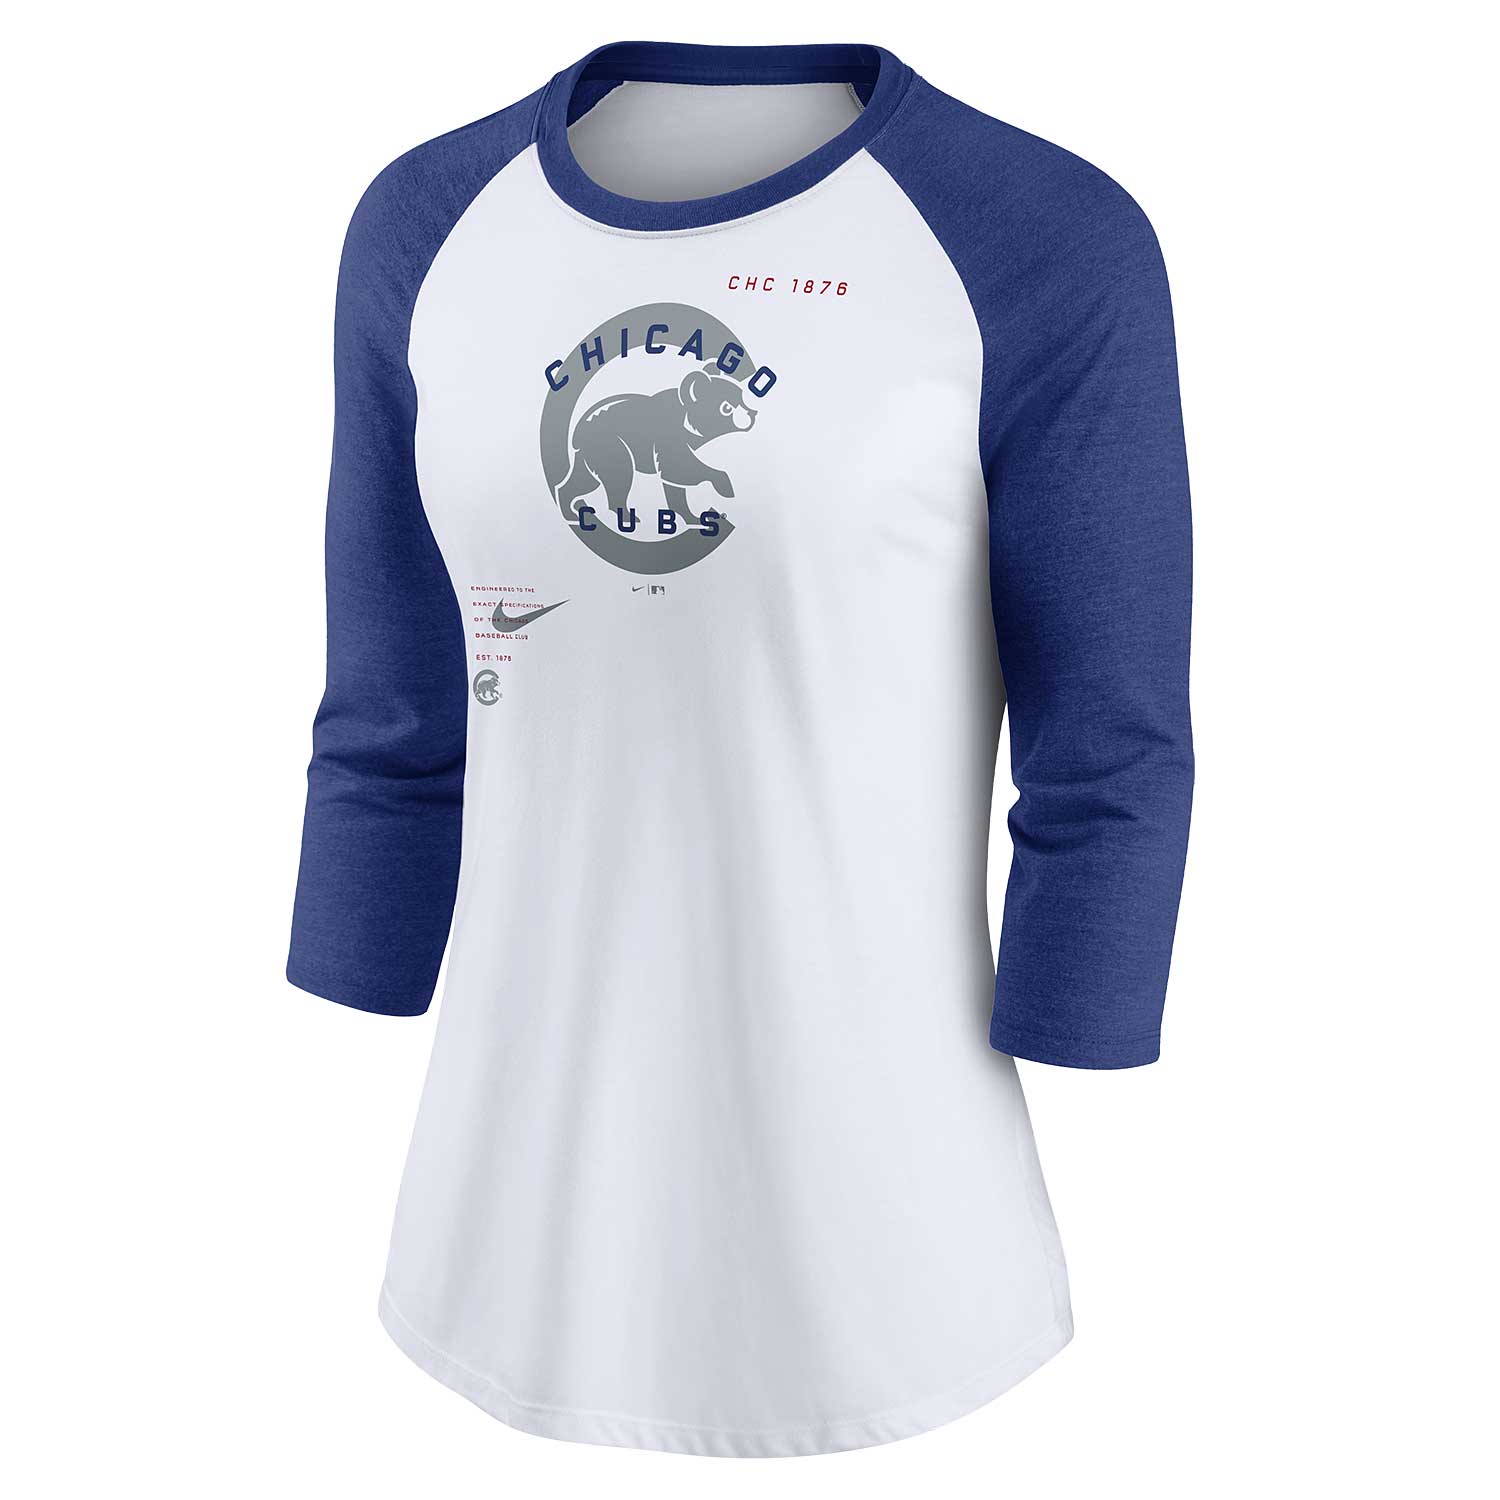 Chicago Cubs Baseball Raglan Shirt White Blue 3/4 Sleeve MLB Women’s Medium